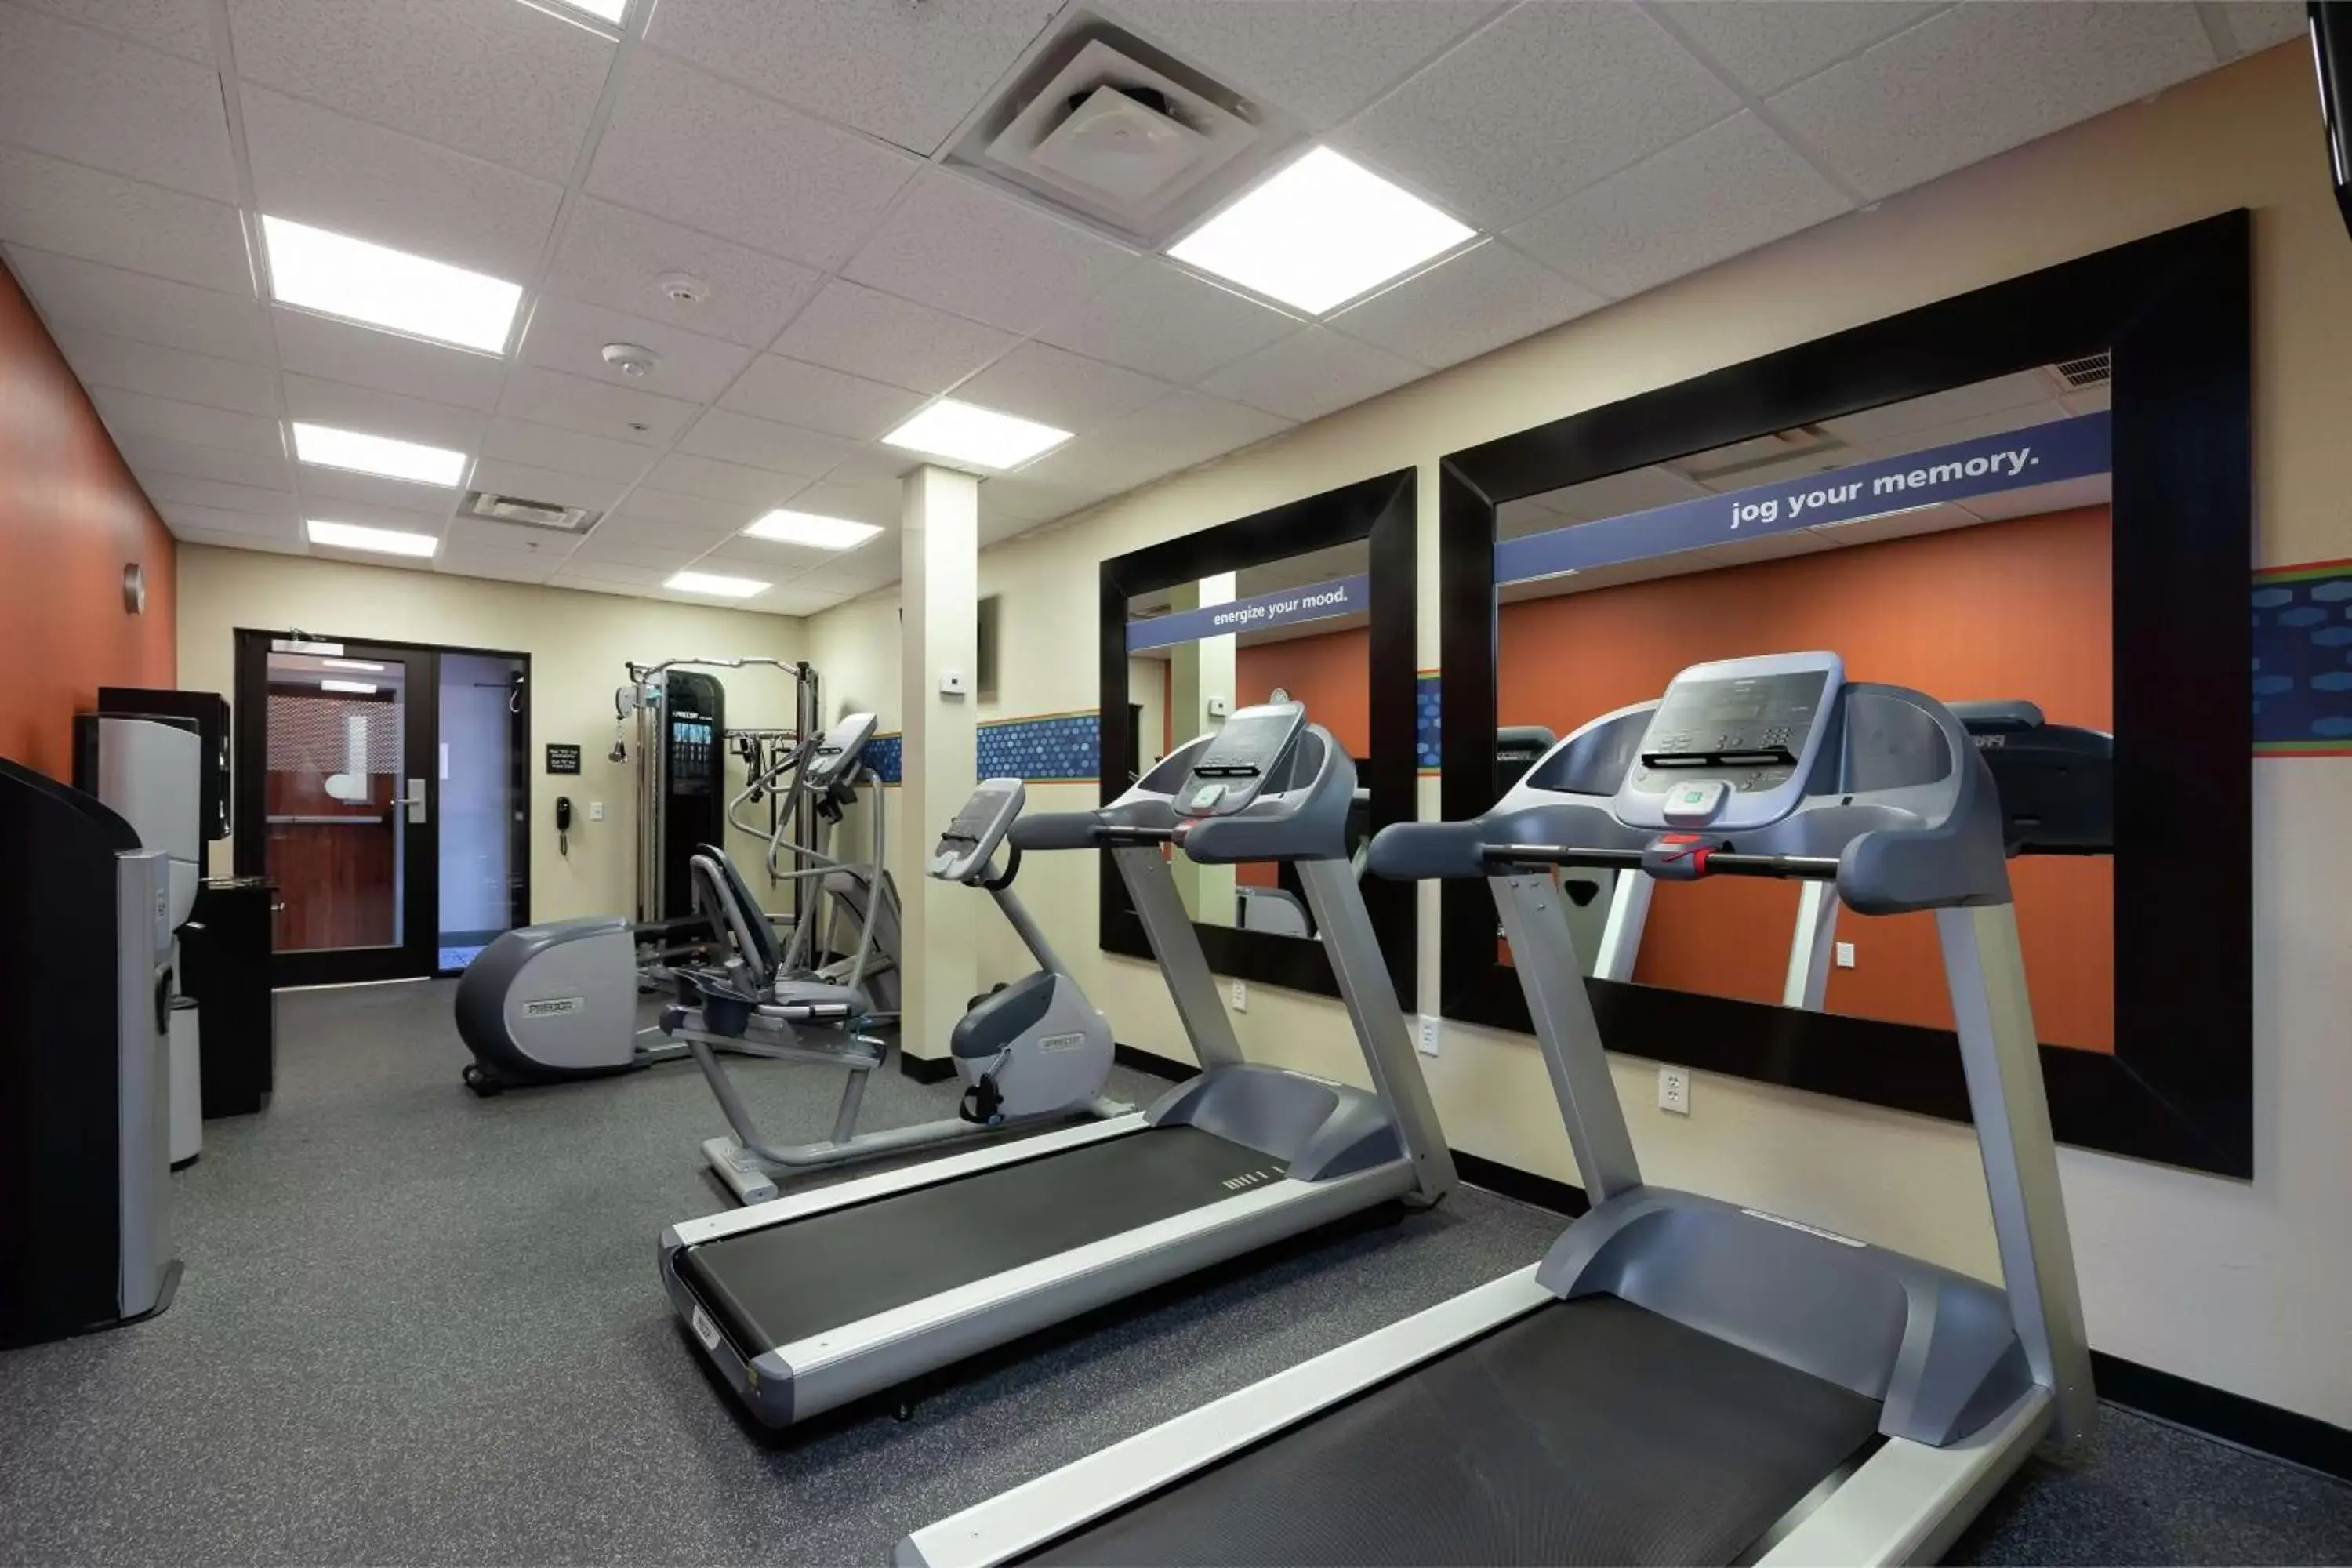 Fitness centre/facilities, Fitness Center/Facilities in Hampton Inn Houston/Humble-Airport Area